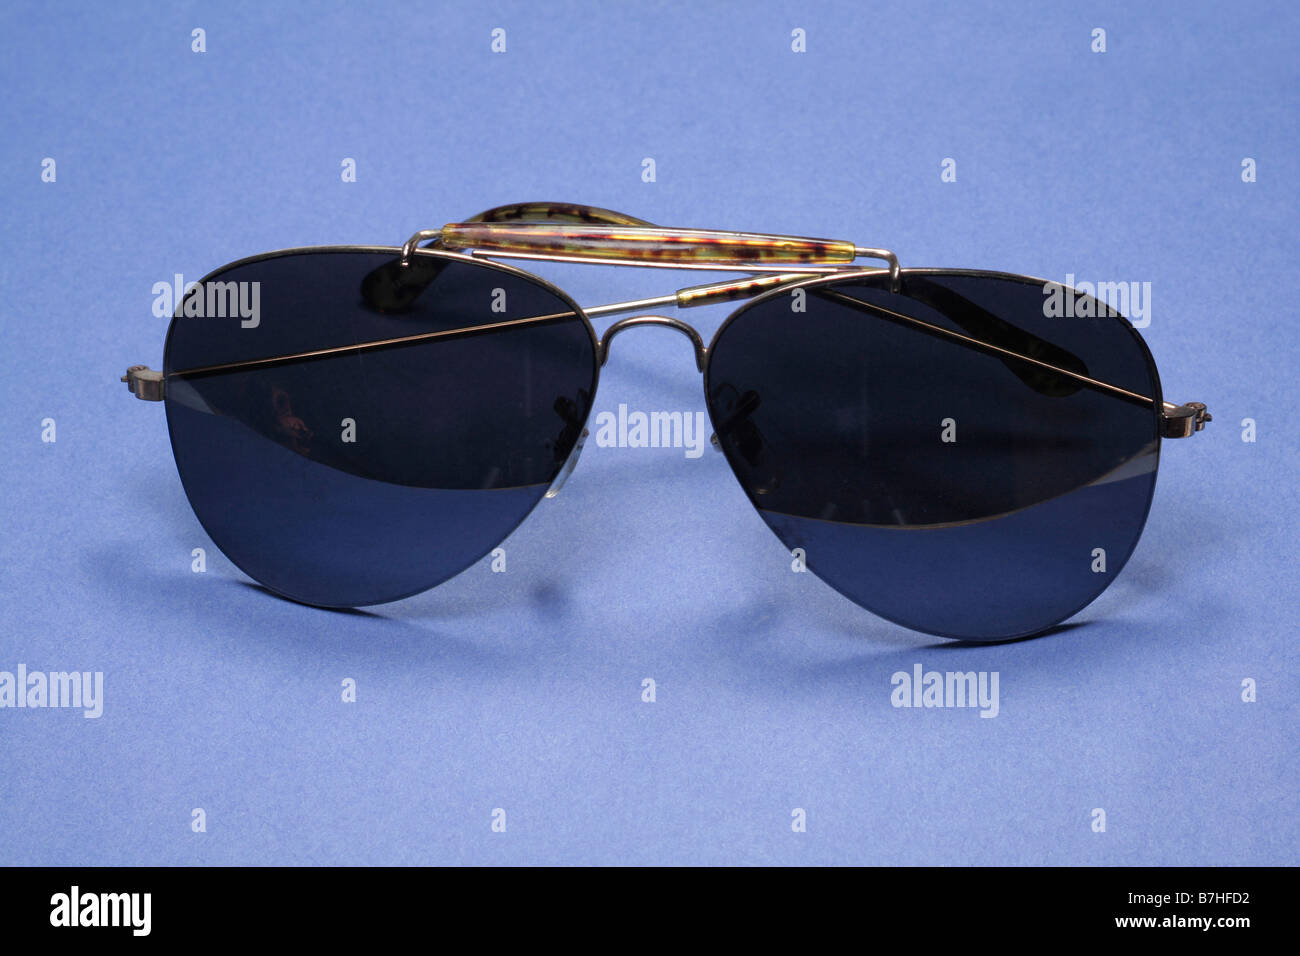 Aviator style sunglasses Stock Photo